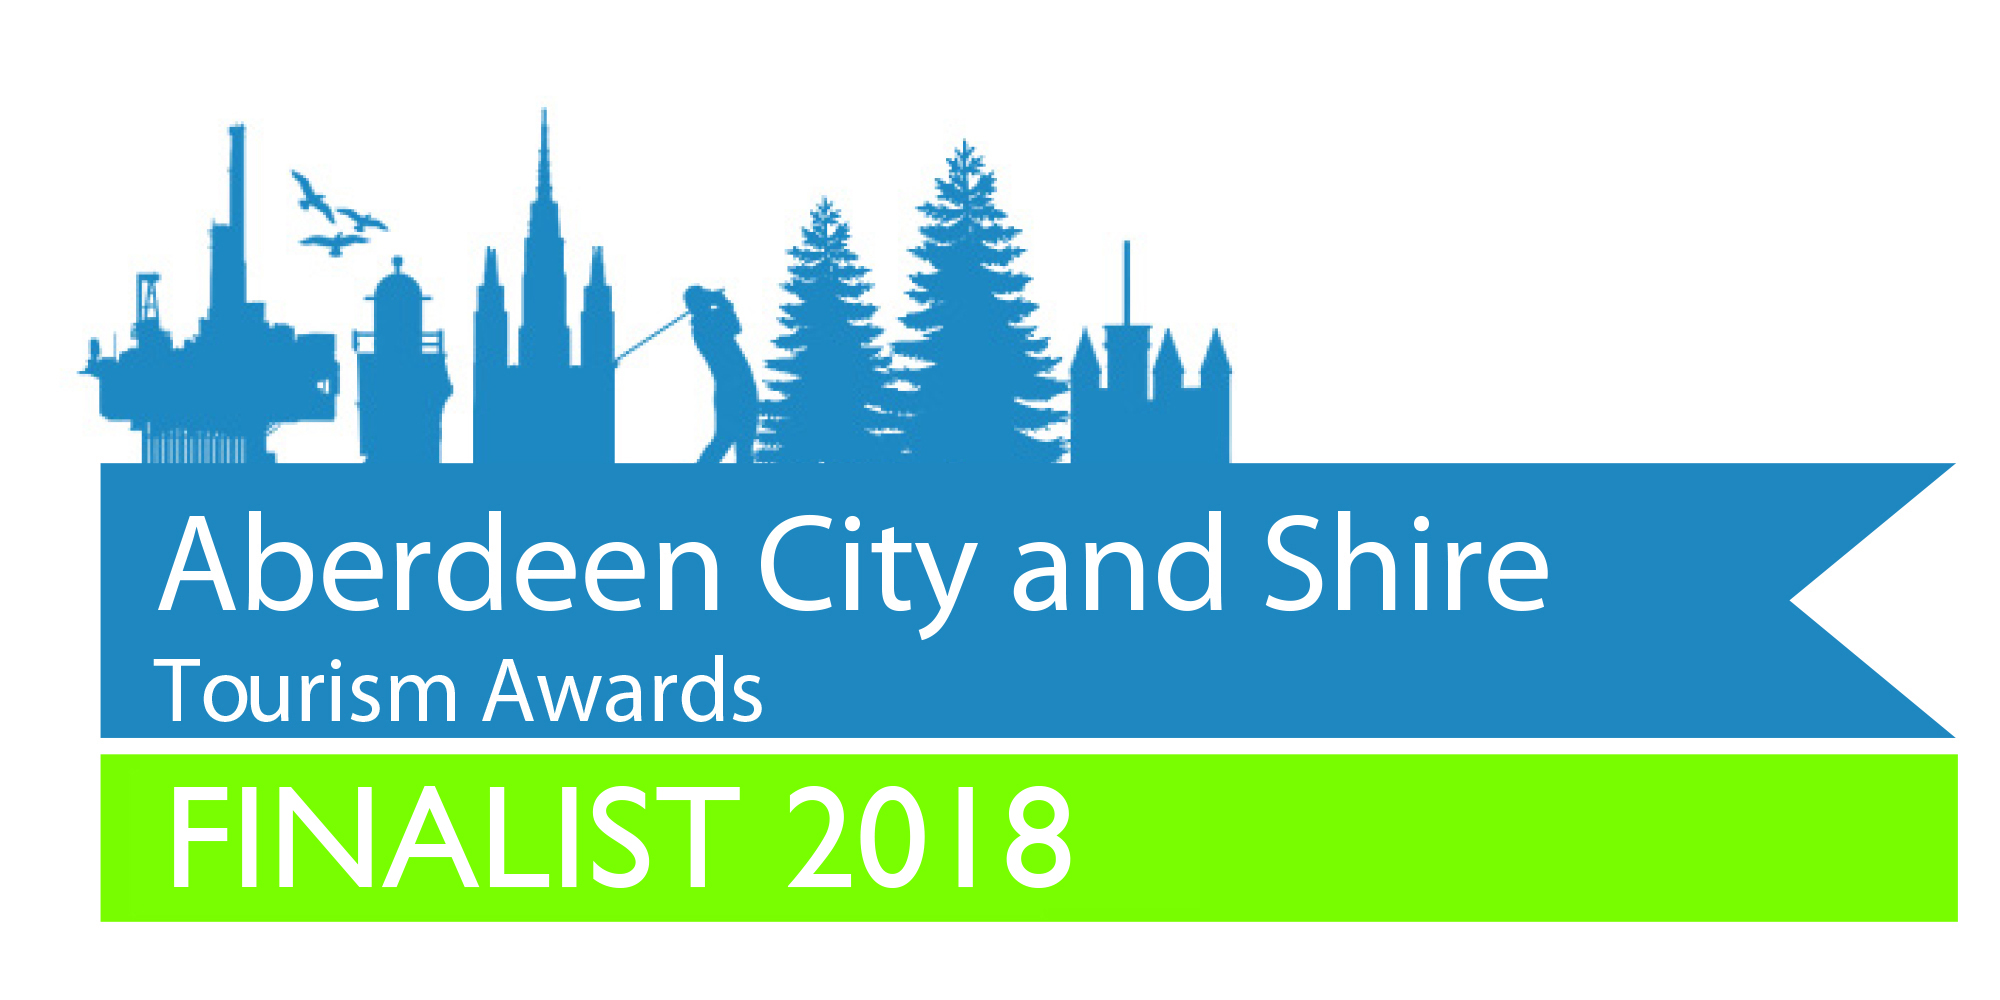 Aberdeen City and Shire Tourism Award Finalist 2018